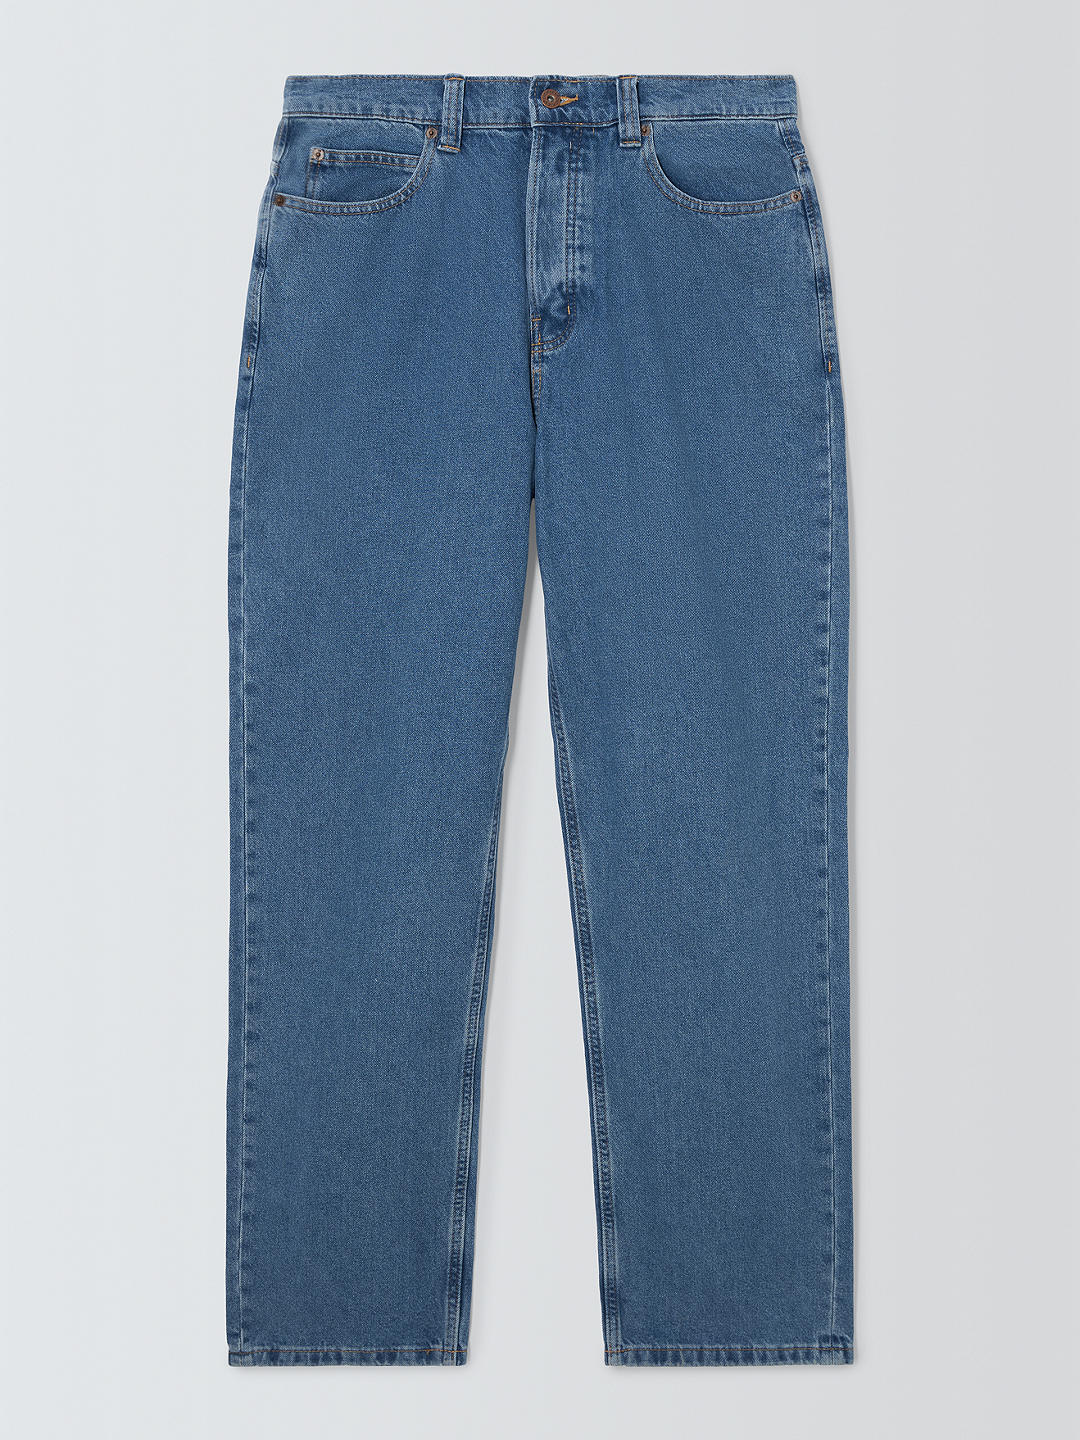 Dickies Thomasville Denim Jeans, Blue